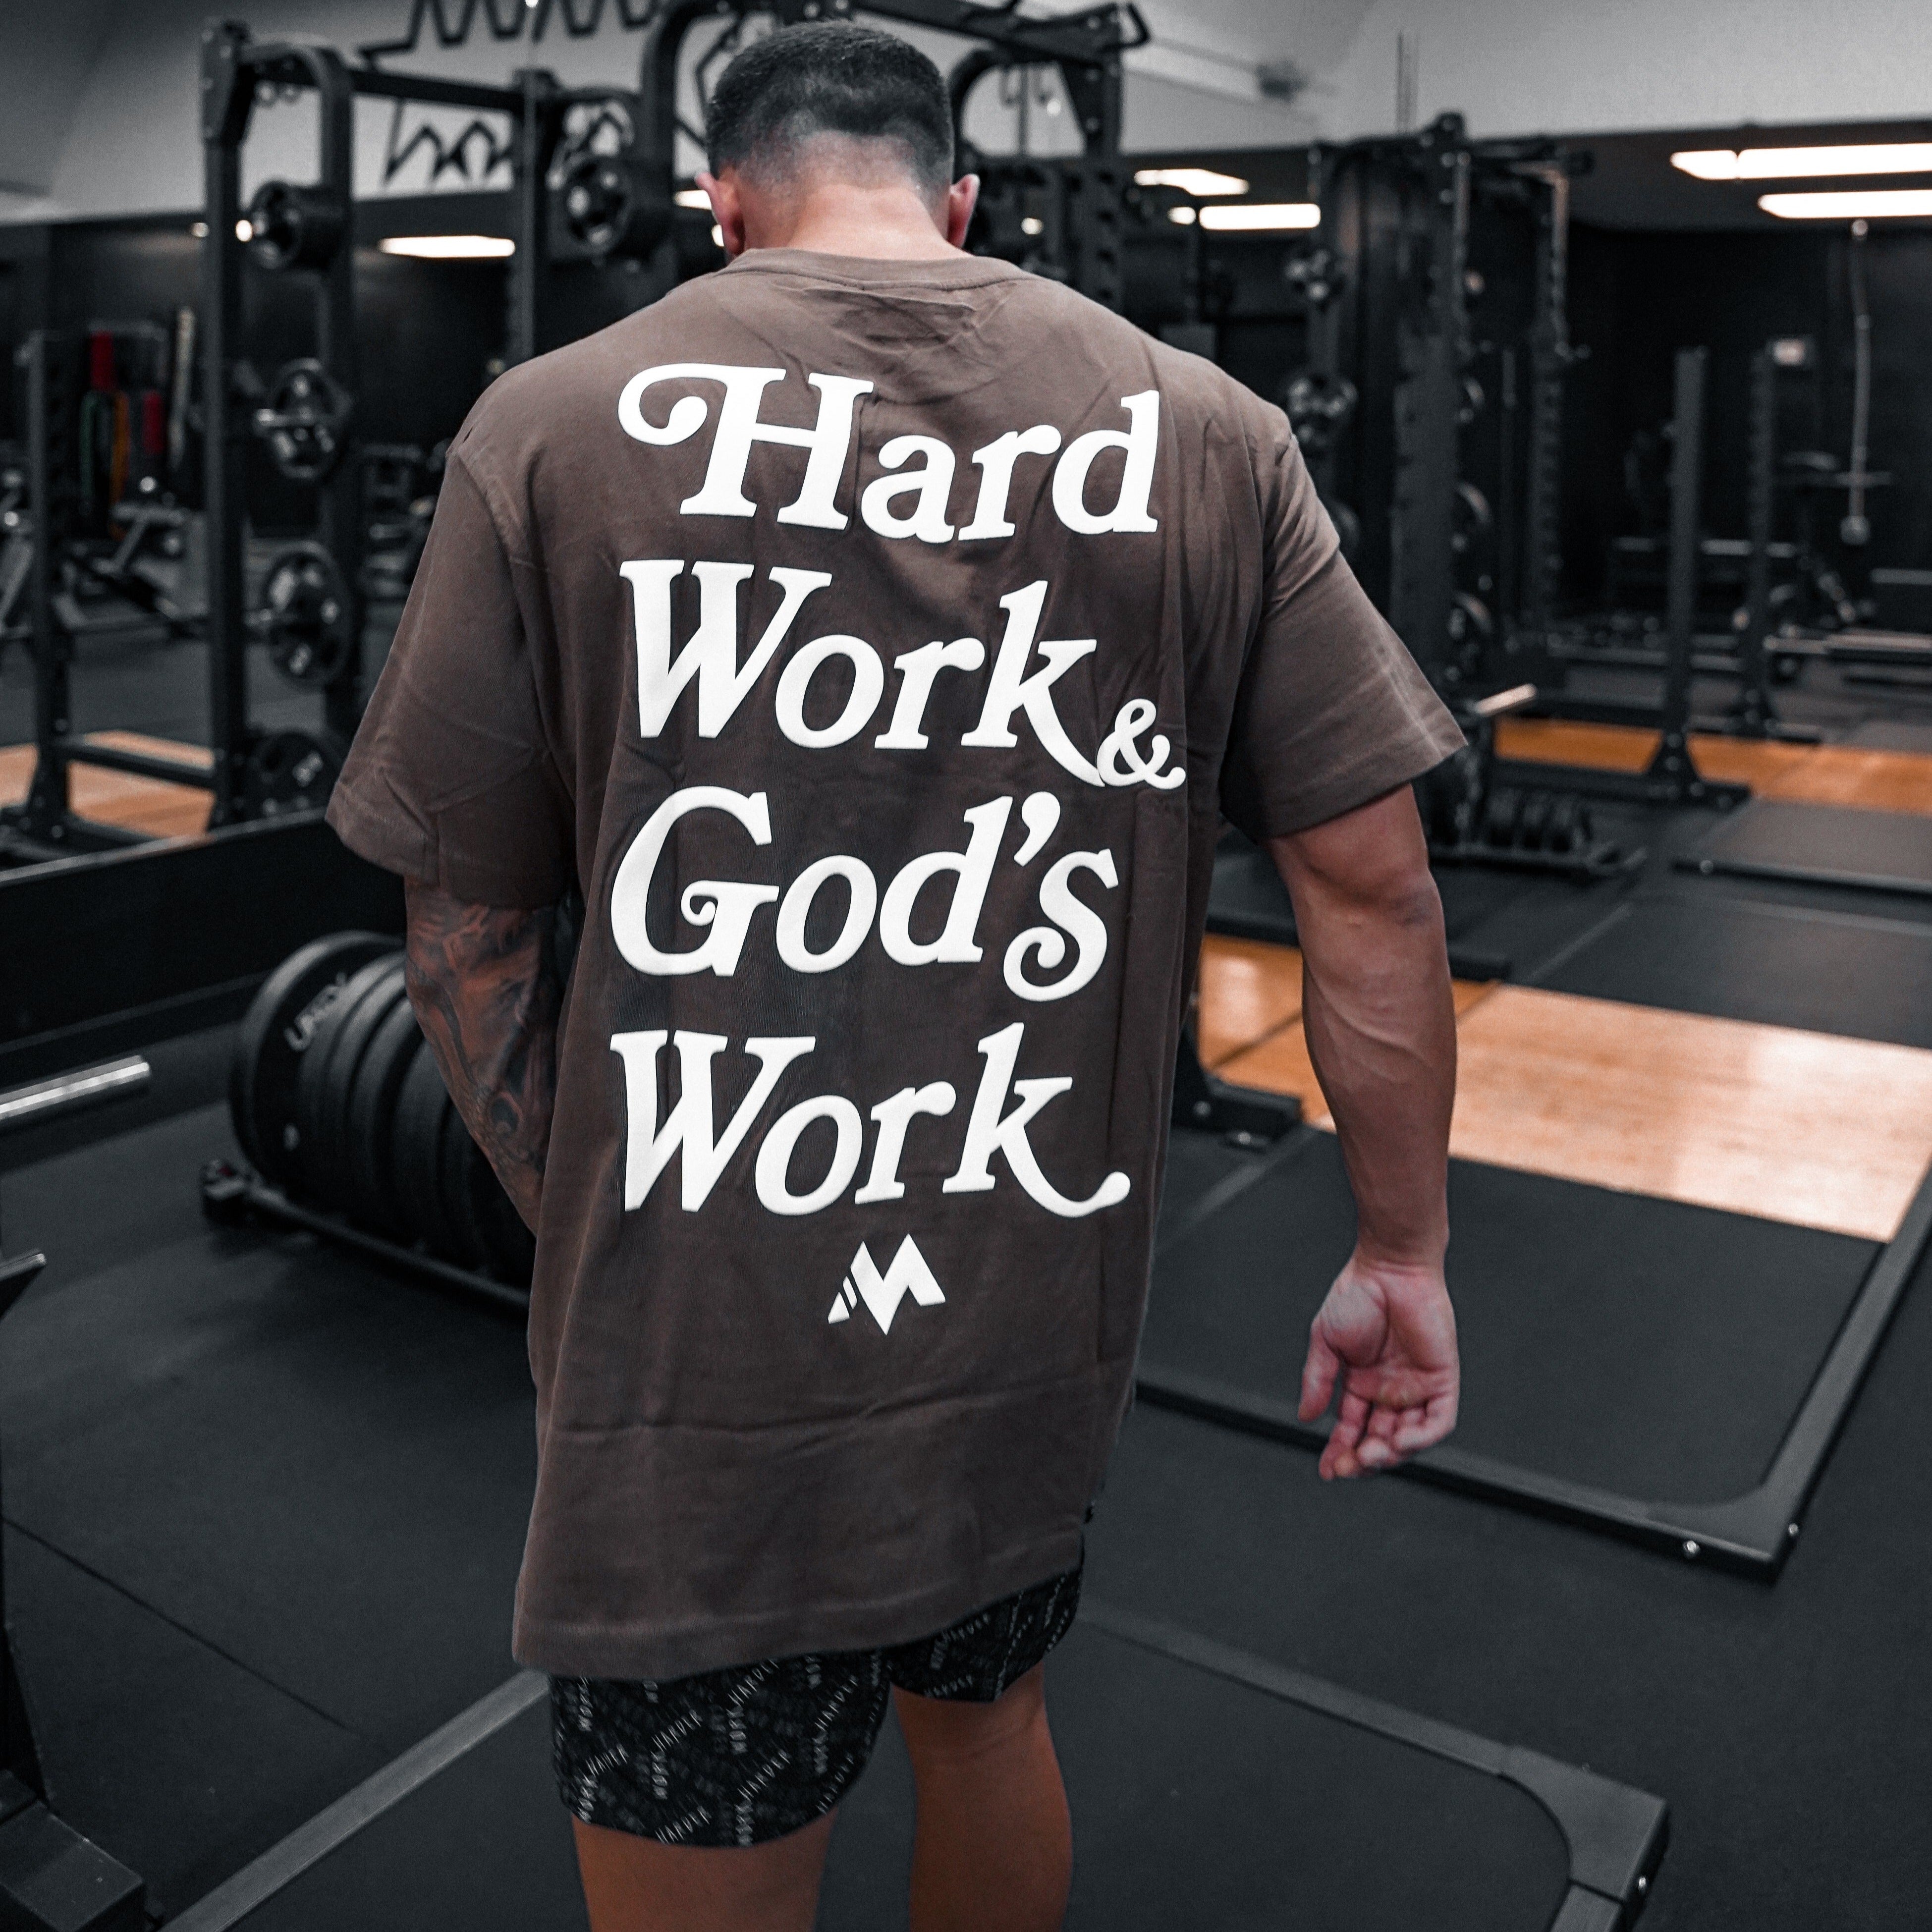 'HARD WORK & GOD'S WORK' TEE - COFFEE